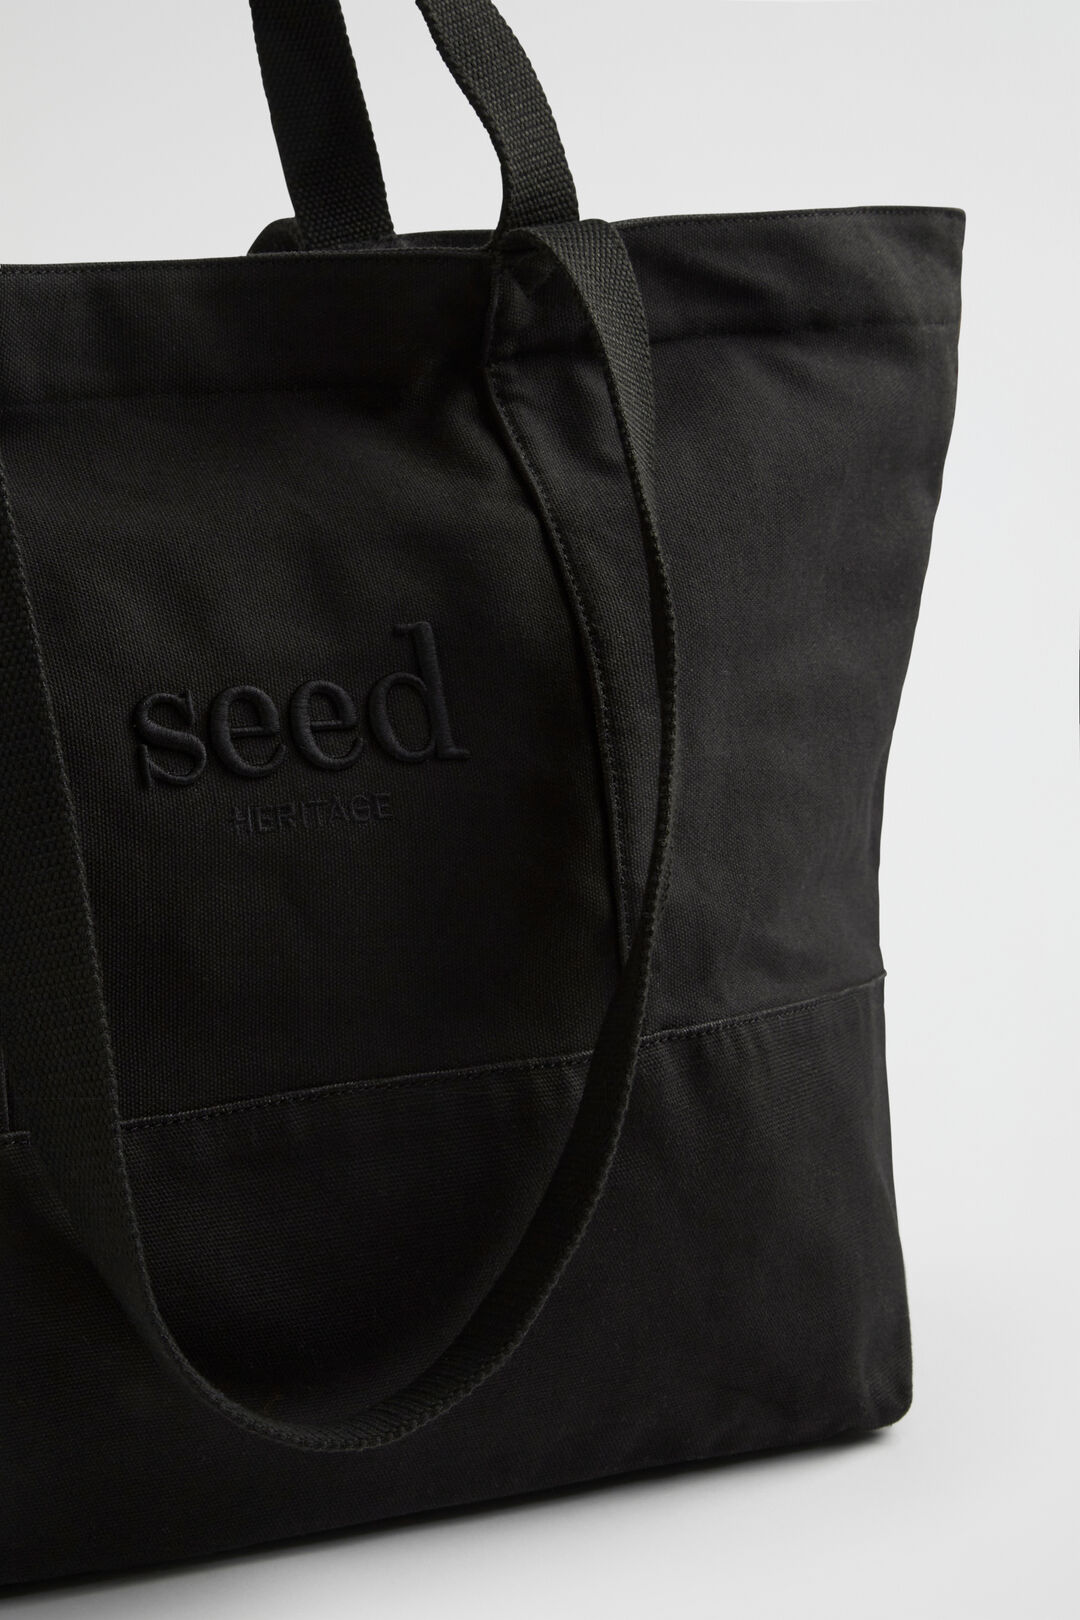 Seed Overnight Bag  True Black  hi-res